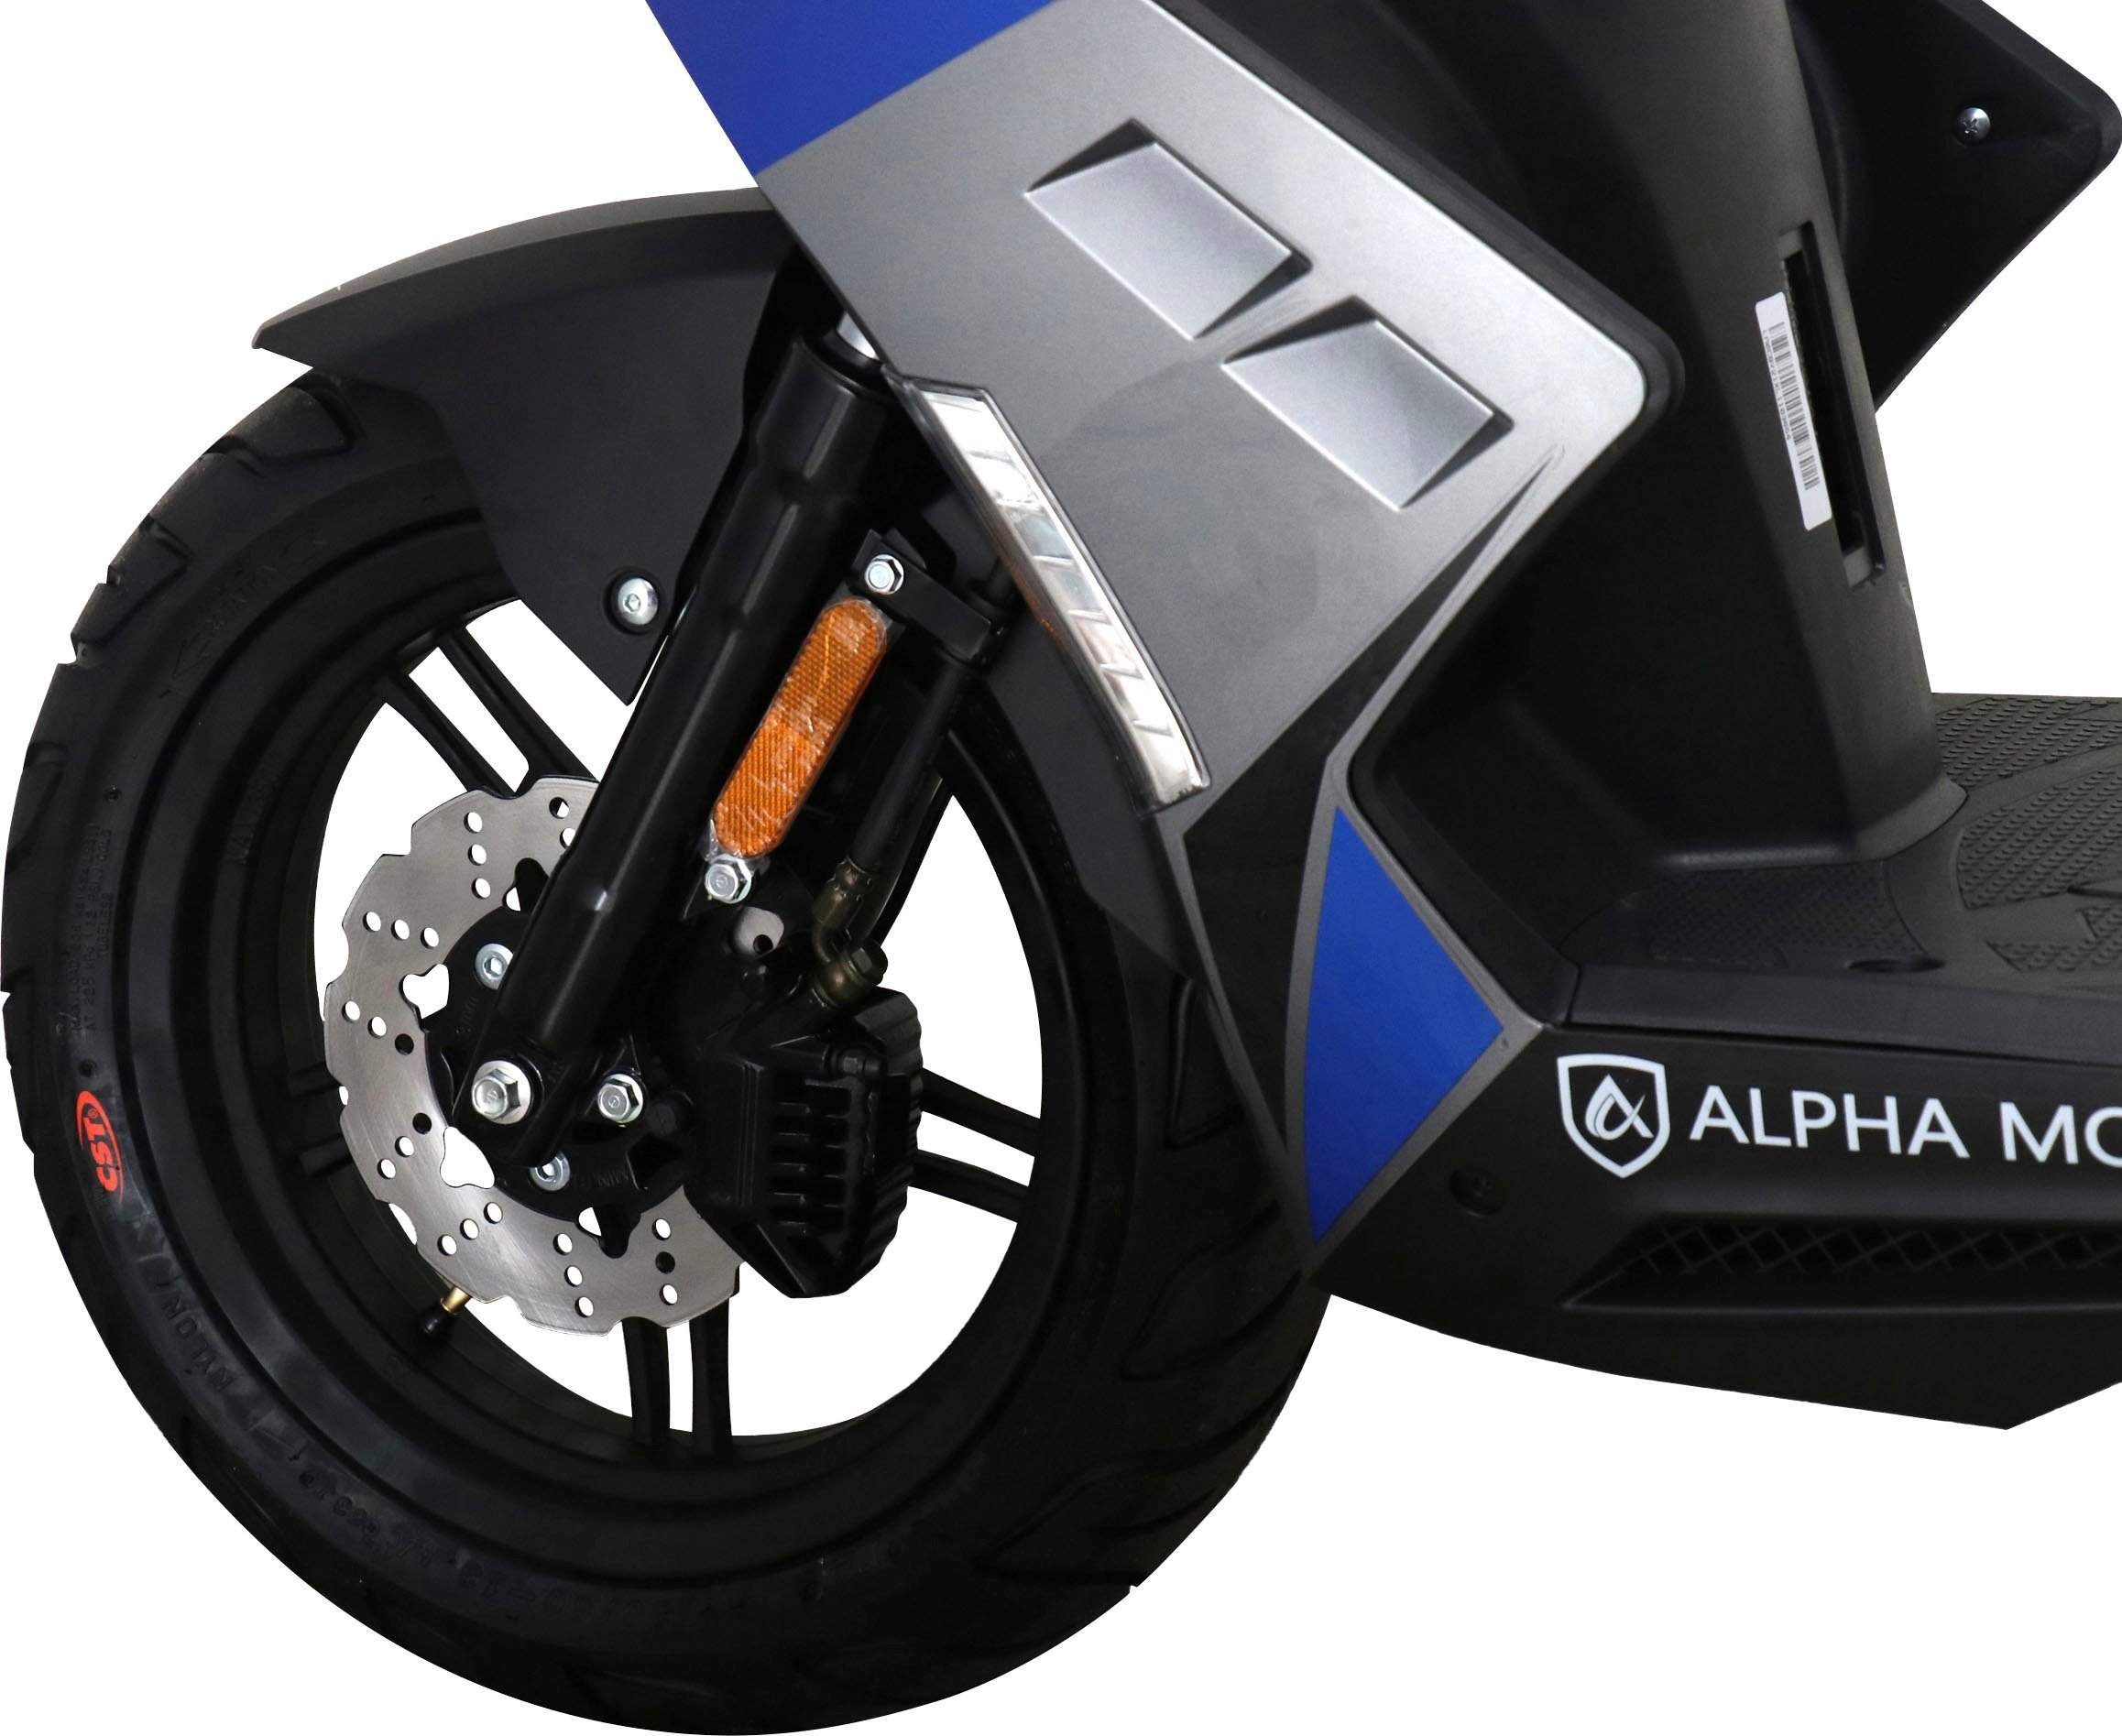 Alpha Motors Motorroller Mustang ccm, Euro blau-grau km/h, 5 45 50 FI